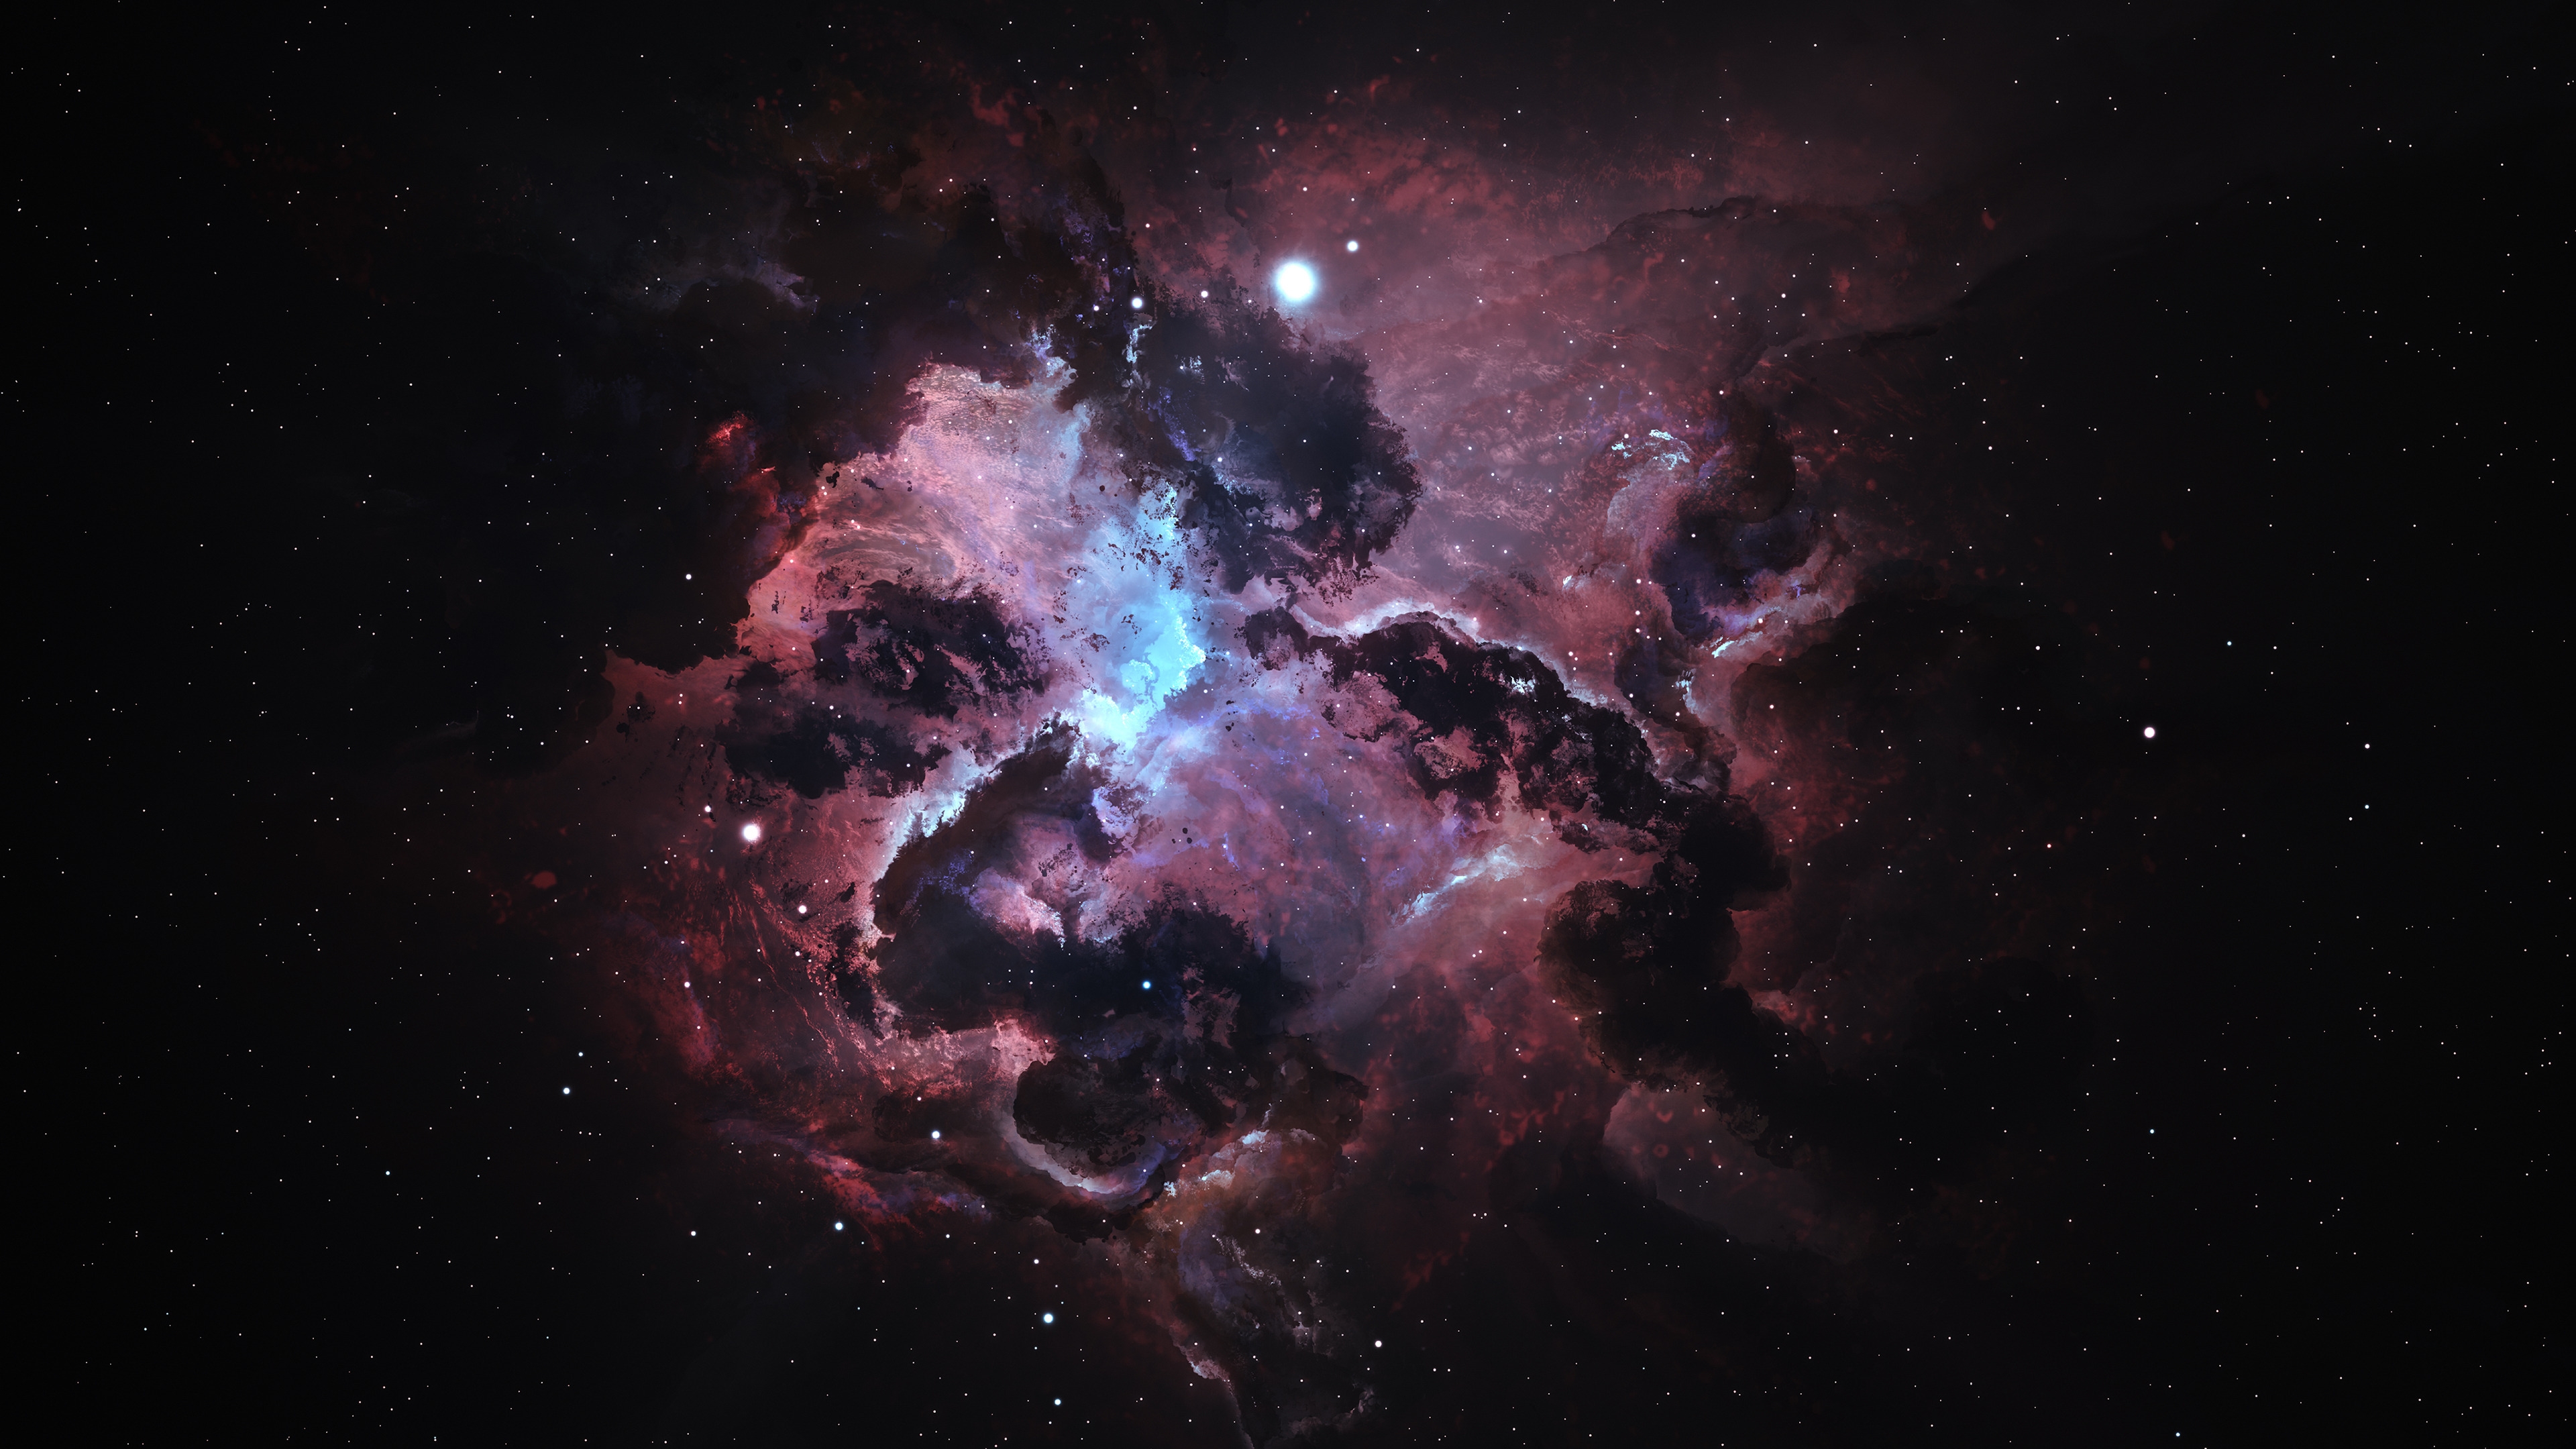 Atlantis Nexus Nebula for 3840 x 2160 Ultra HD resolution